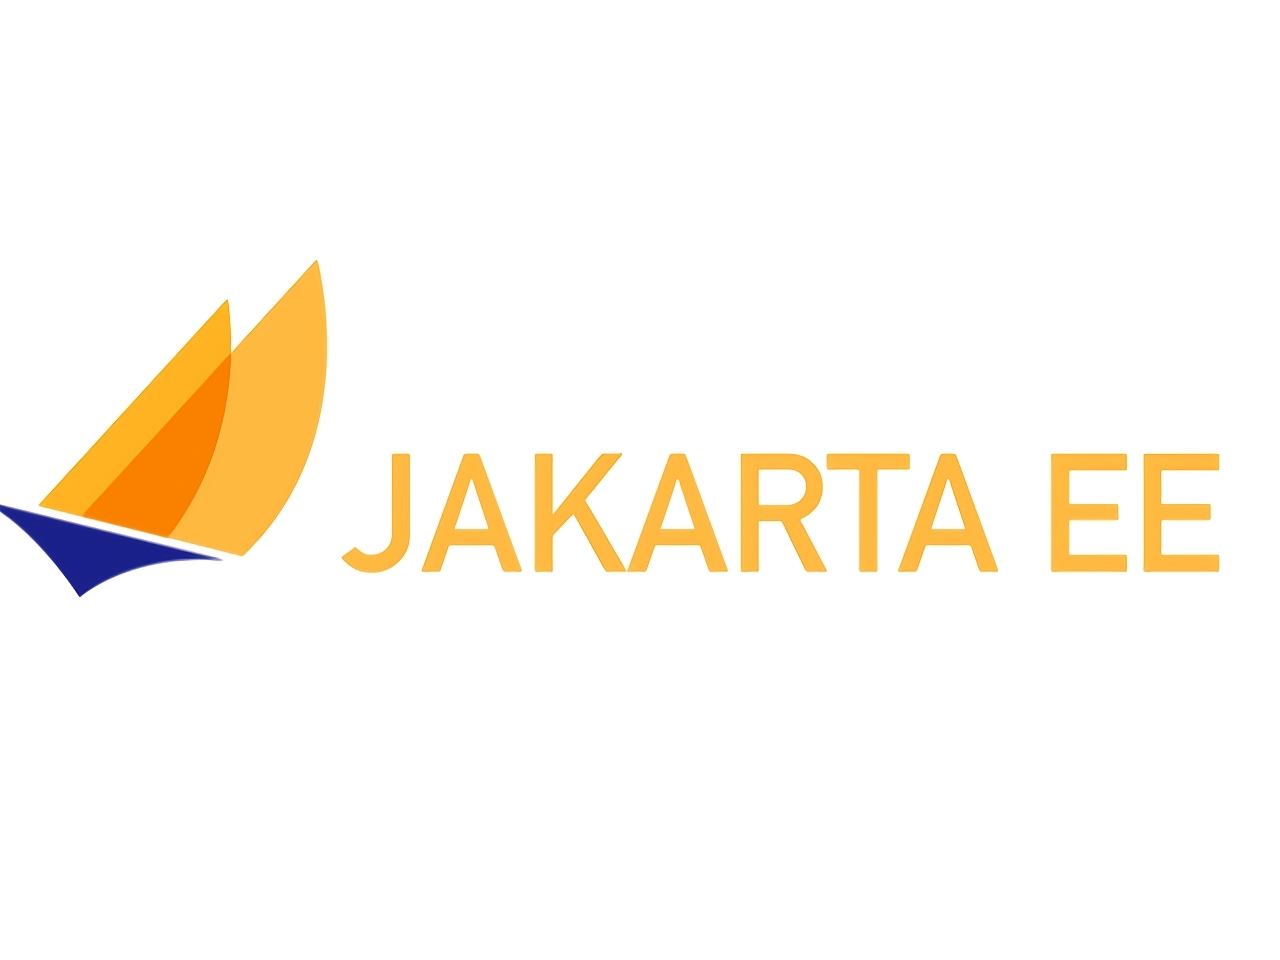 Eclipse Foundationが「Jakarta EE 8」リリース